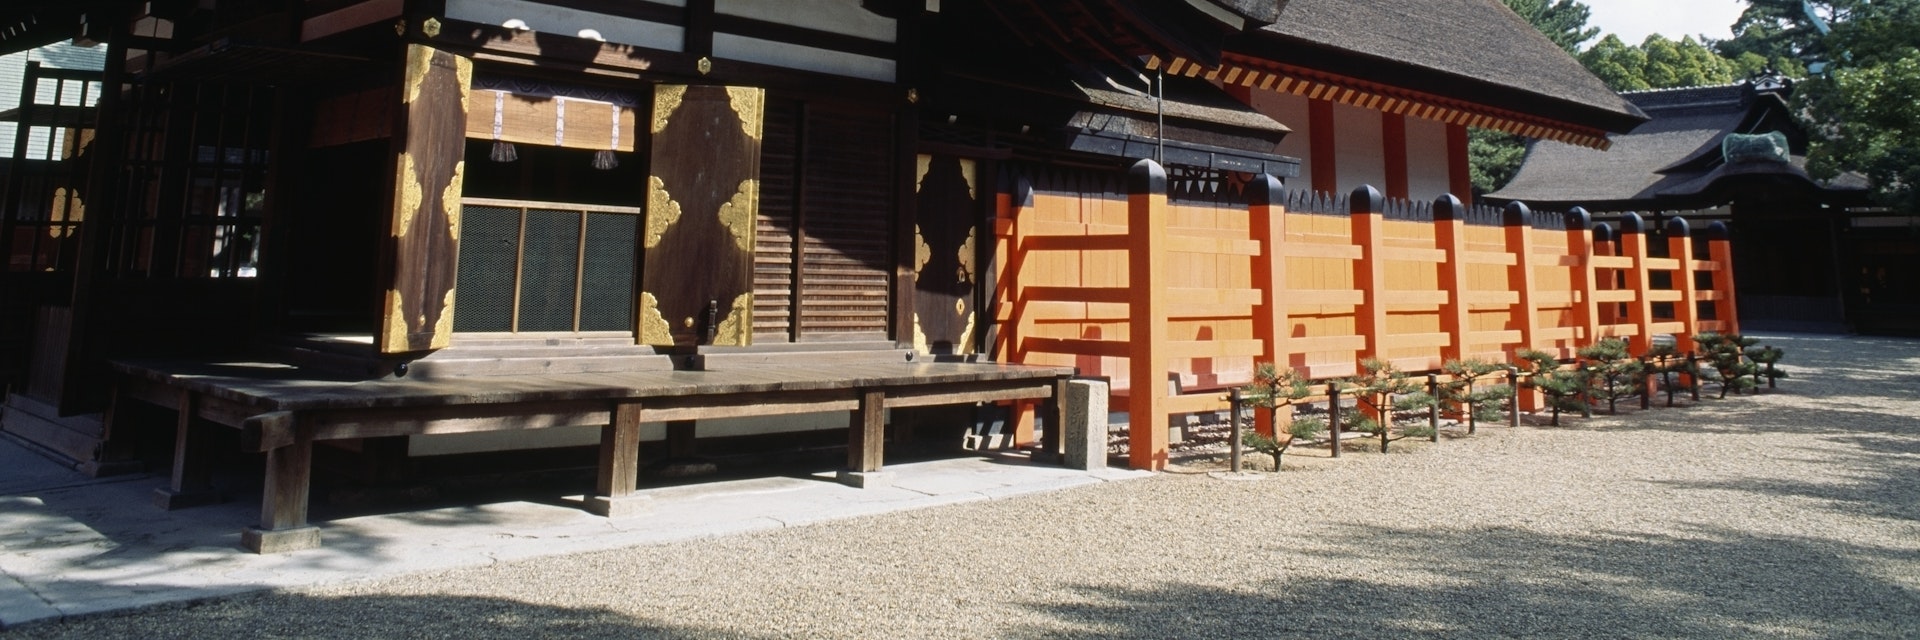 JAPAN - DECEMBER 10: Sumiyoshi Taisha Shinto Shrine, Osaka, Japan, 3rd century. (Photo by DeAgostini/Getty Images)